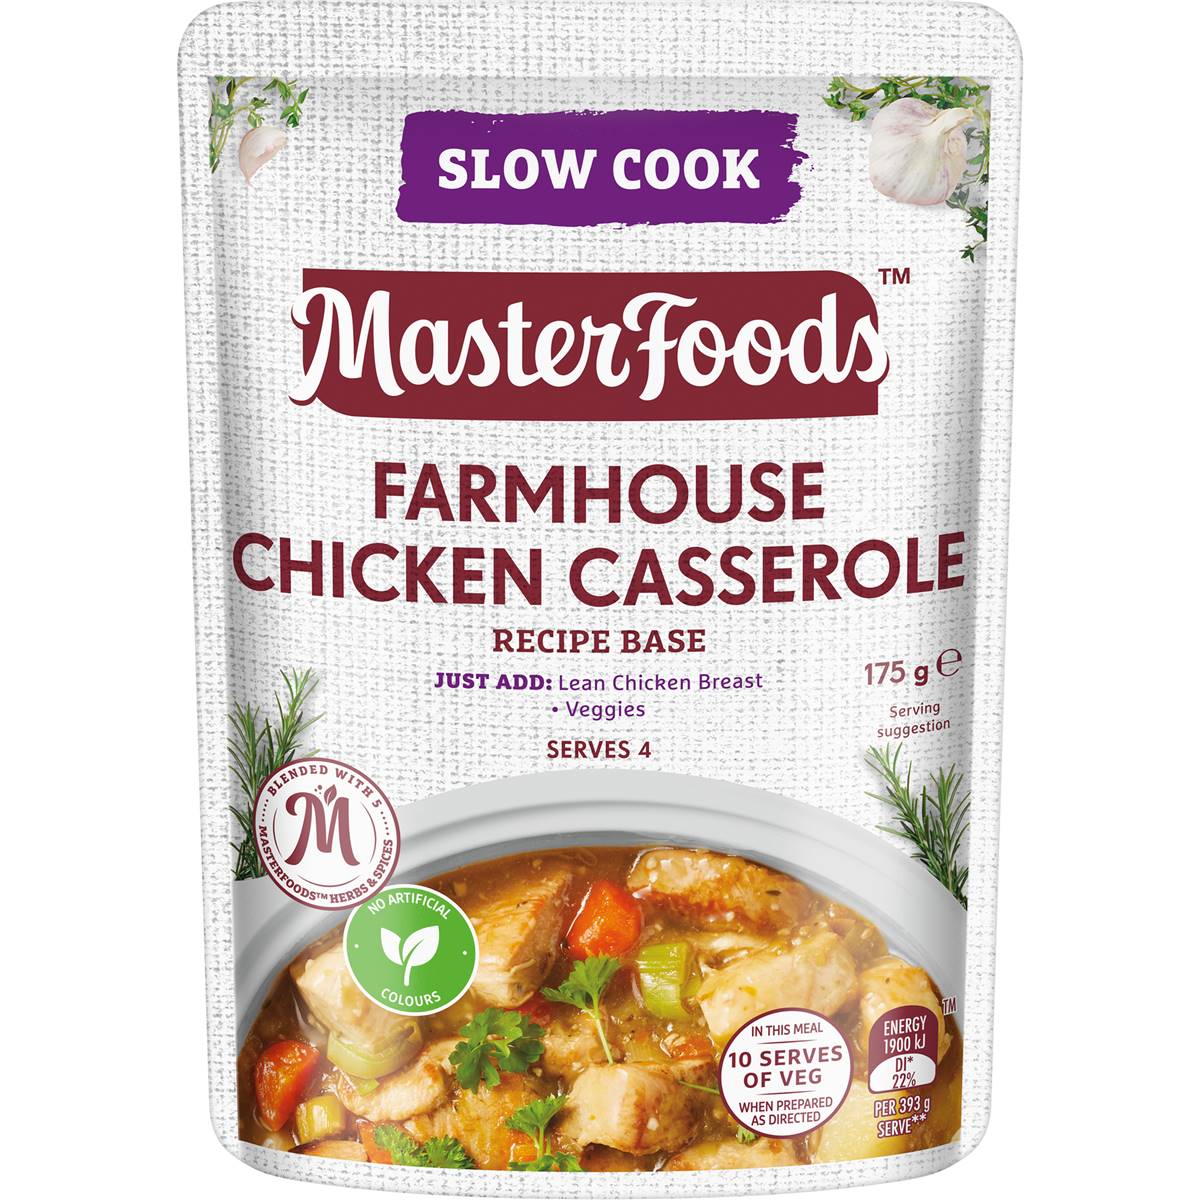 Masterfoods Slow Cooker Farmhouse Chicken Casserole